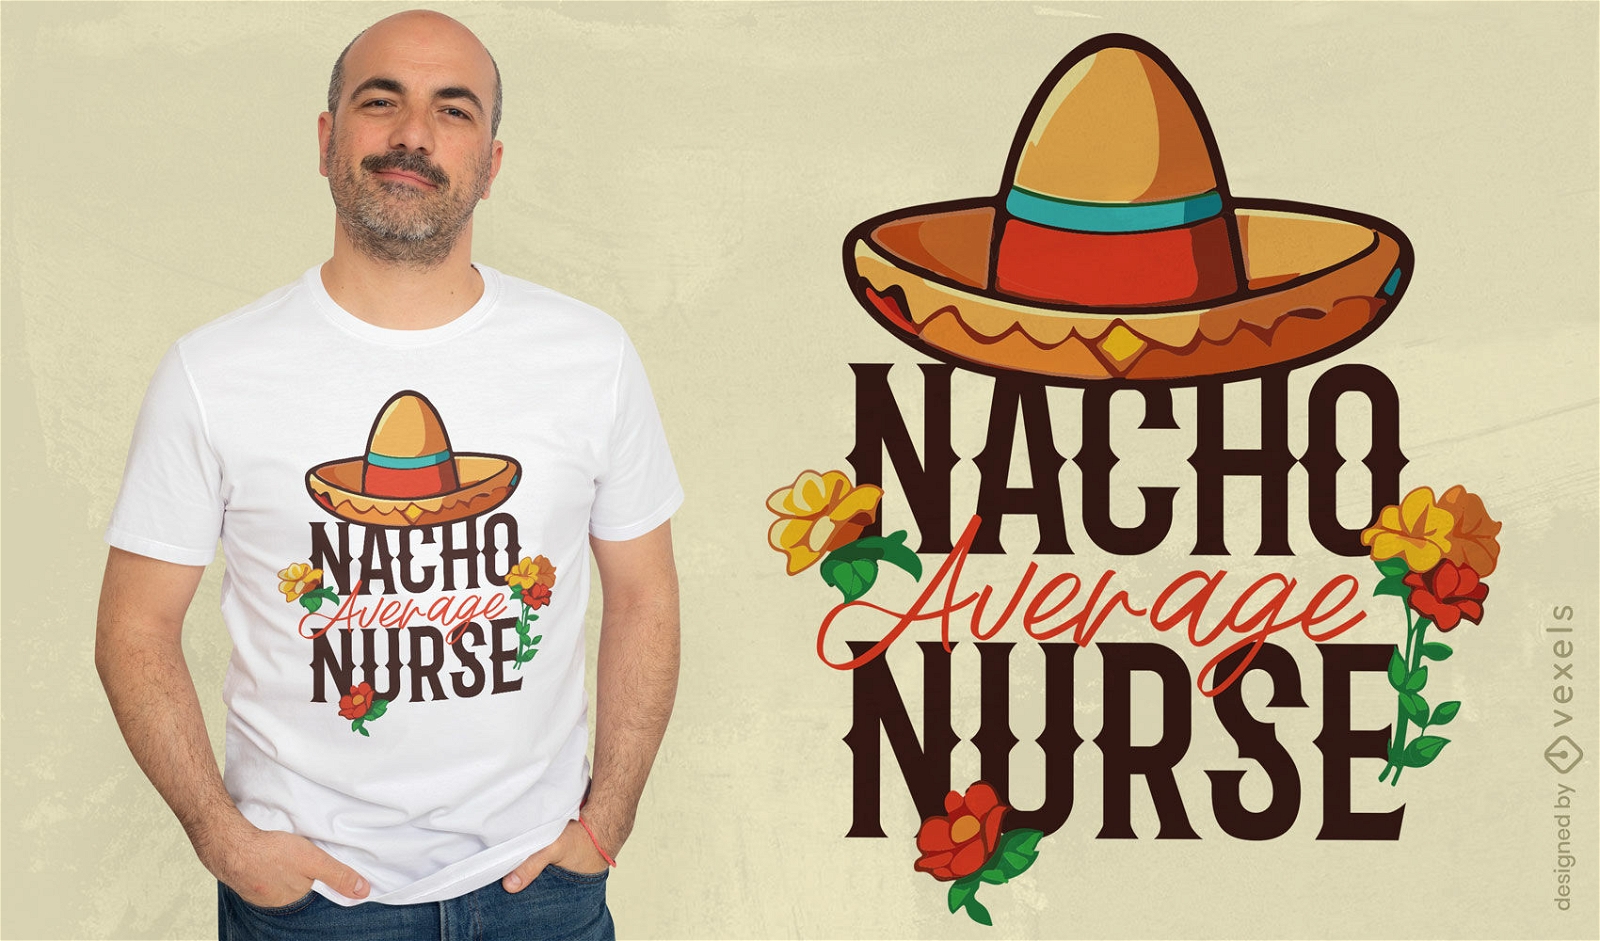 Nachos-themed pun t-shirt design